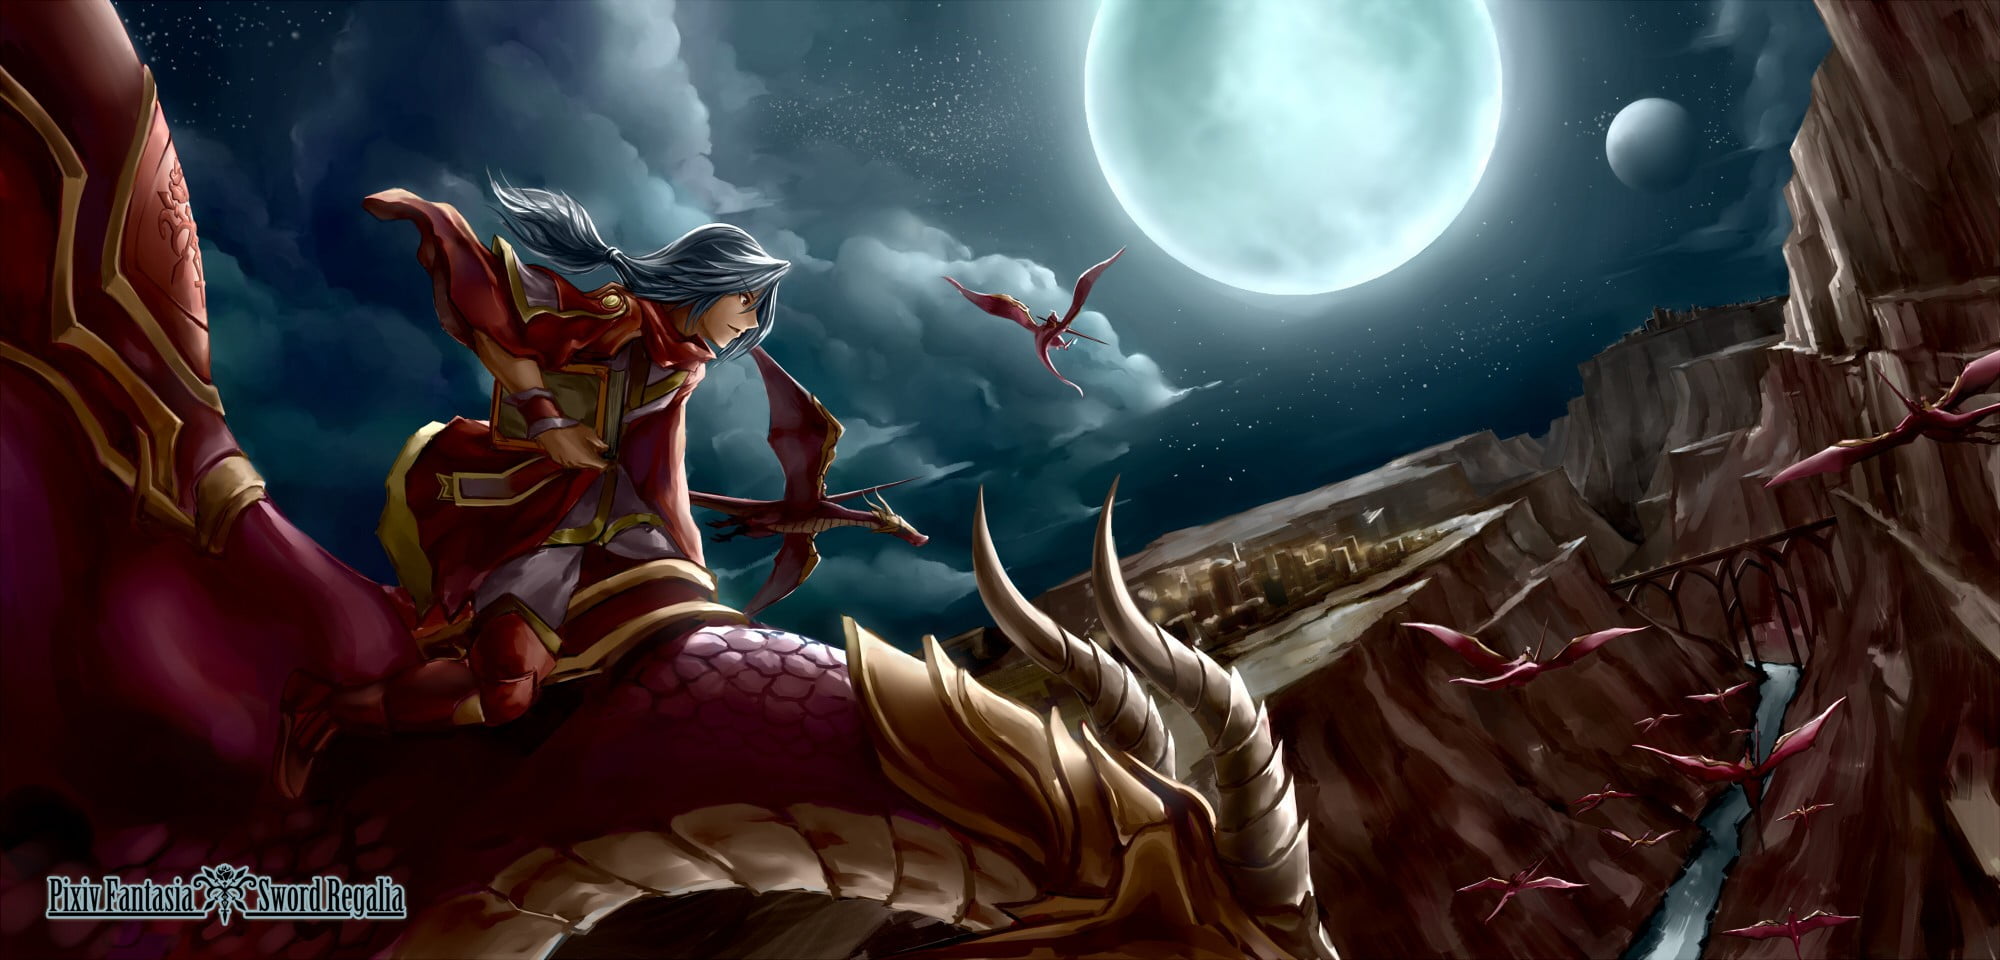 Fairytale wallpaper, Pixiv Fantasia, dragon, Wyvern, moon, night